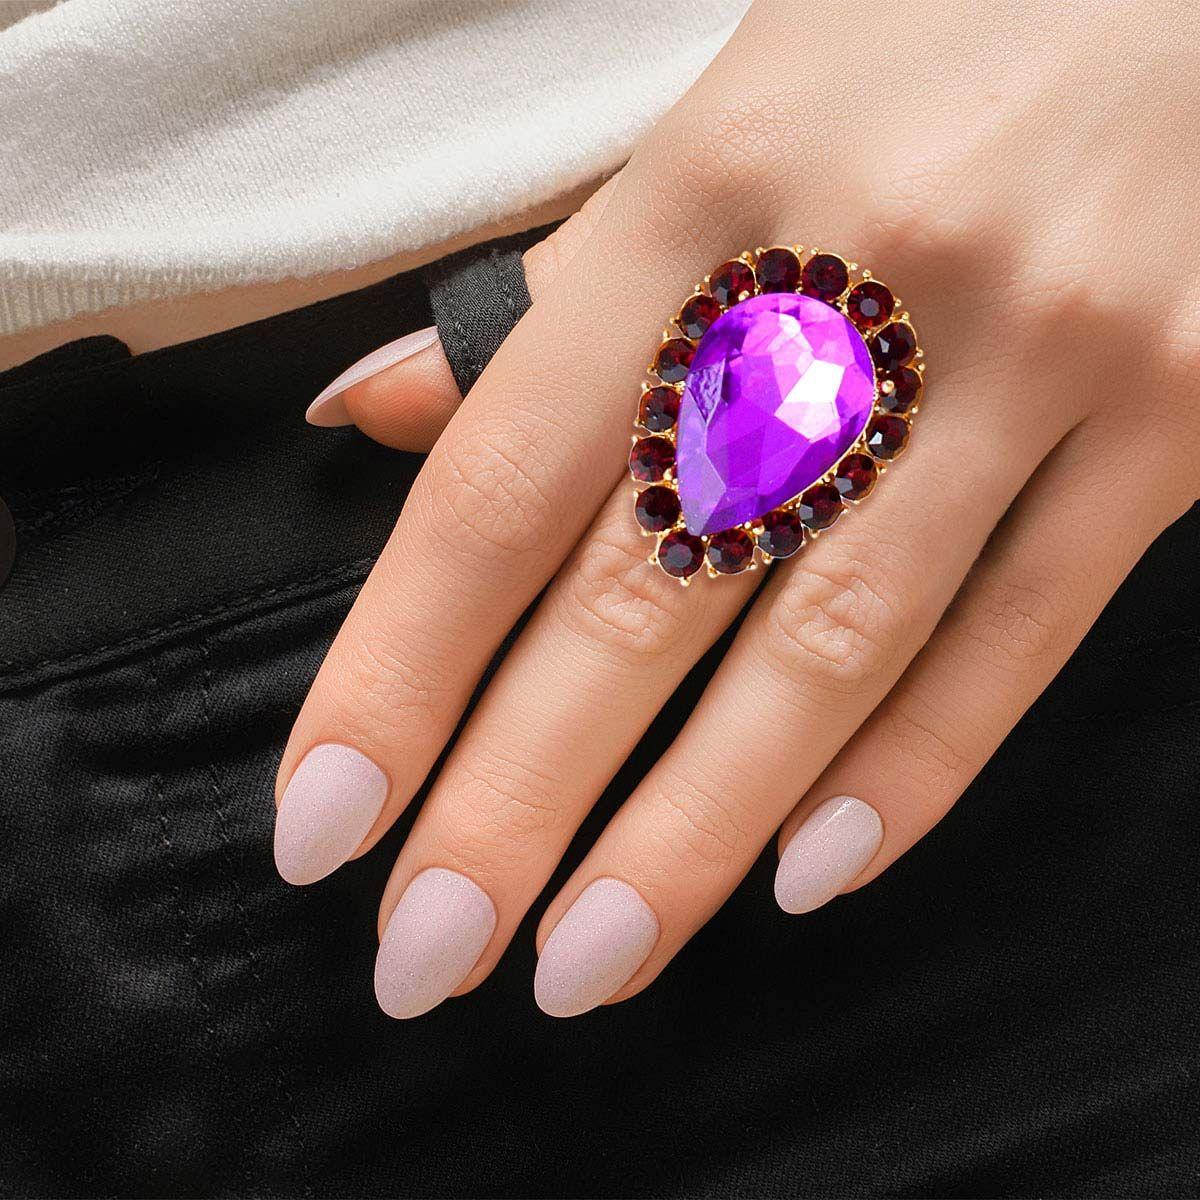 Stunning Purple Teardrop Cocktail Ring: A Stylish Statement Piece